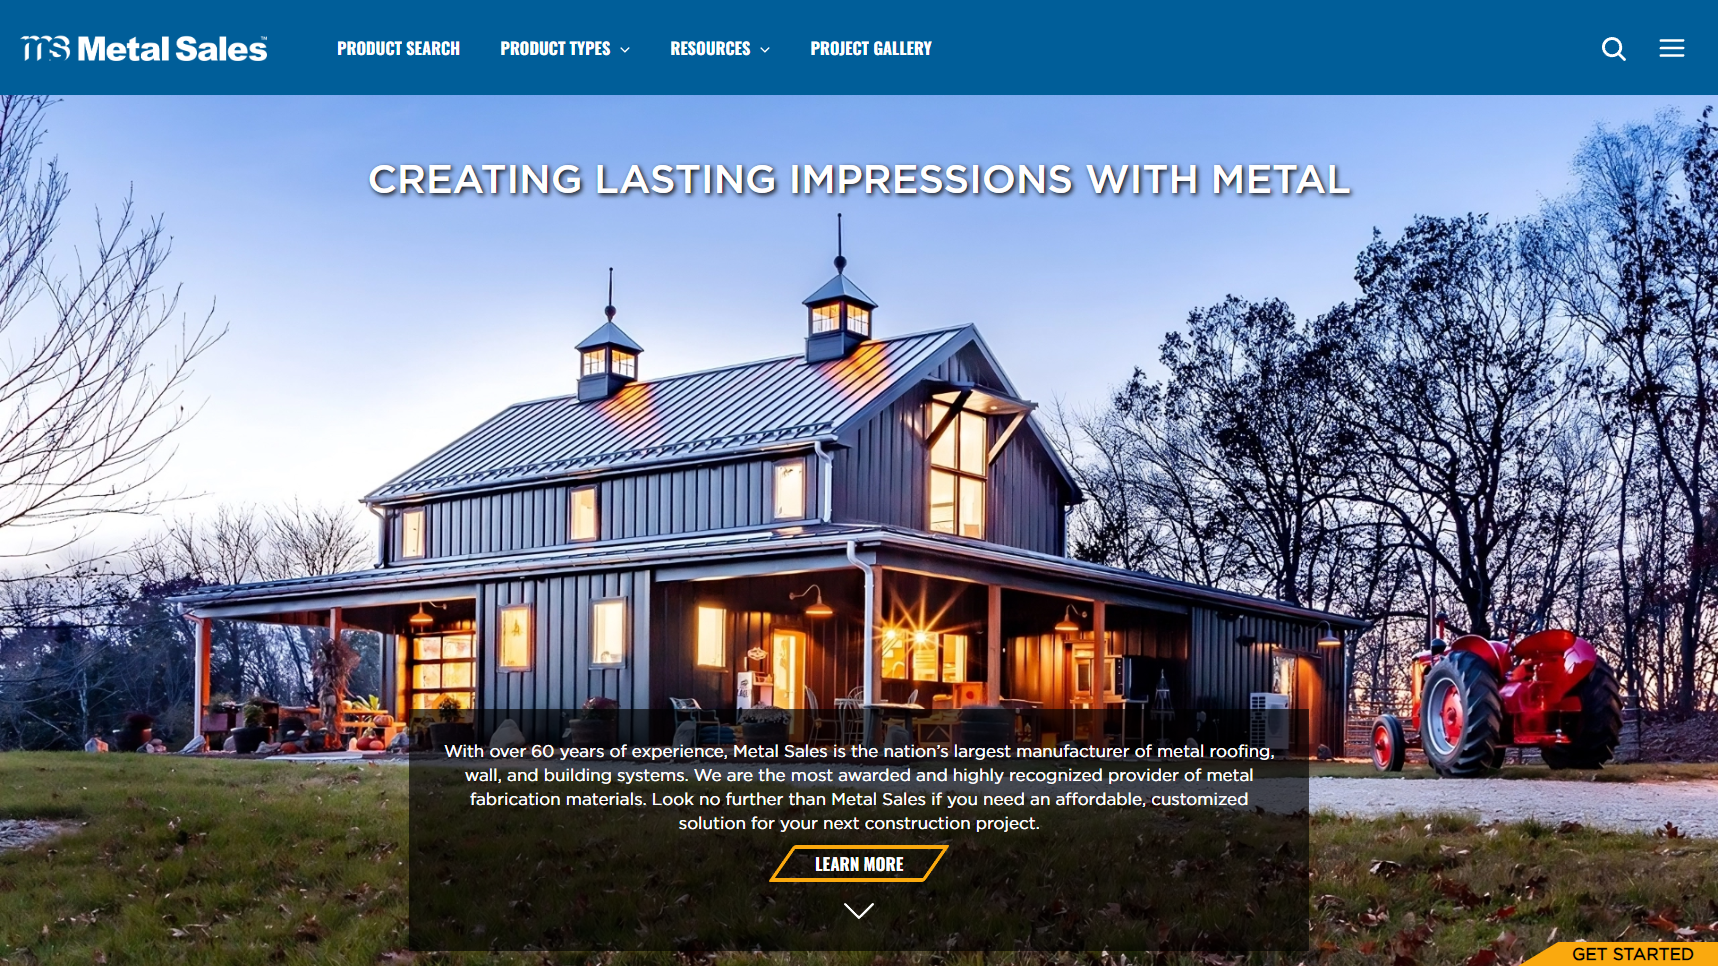 Metal Sales Manufacturing Corporation - Metal Roofing Manufacturer